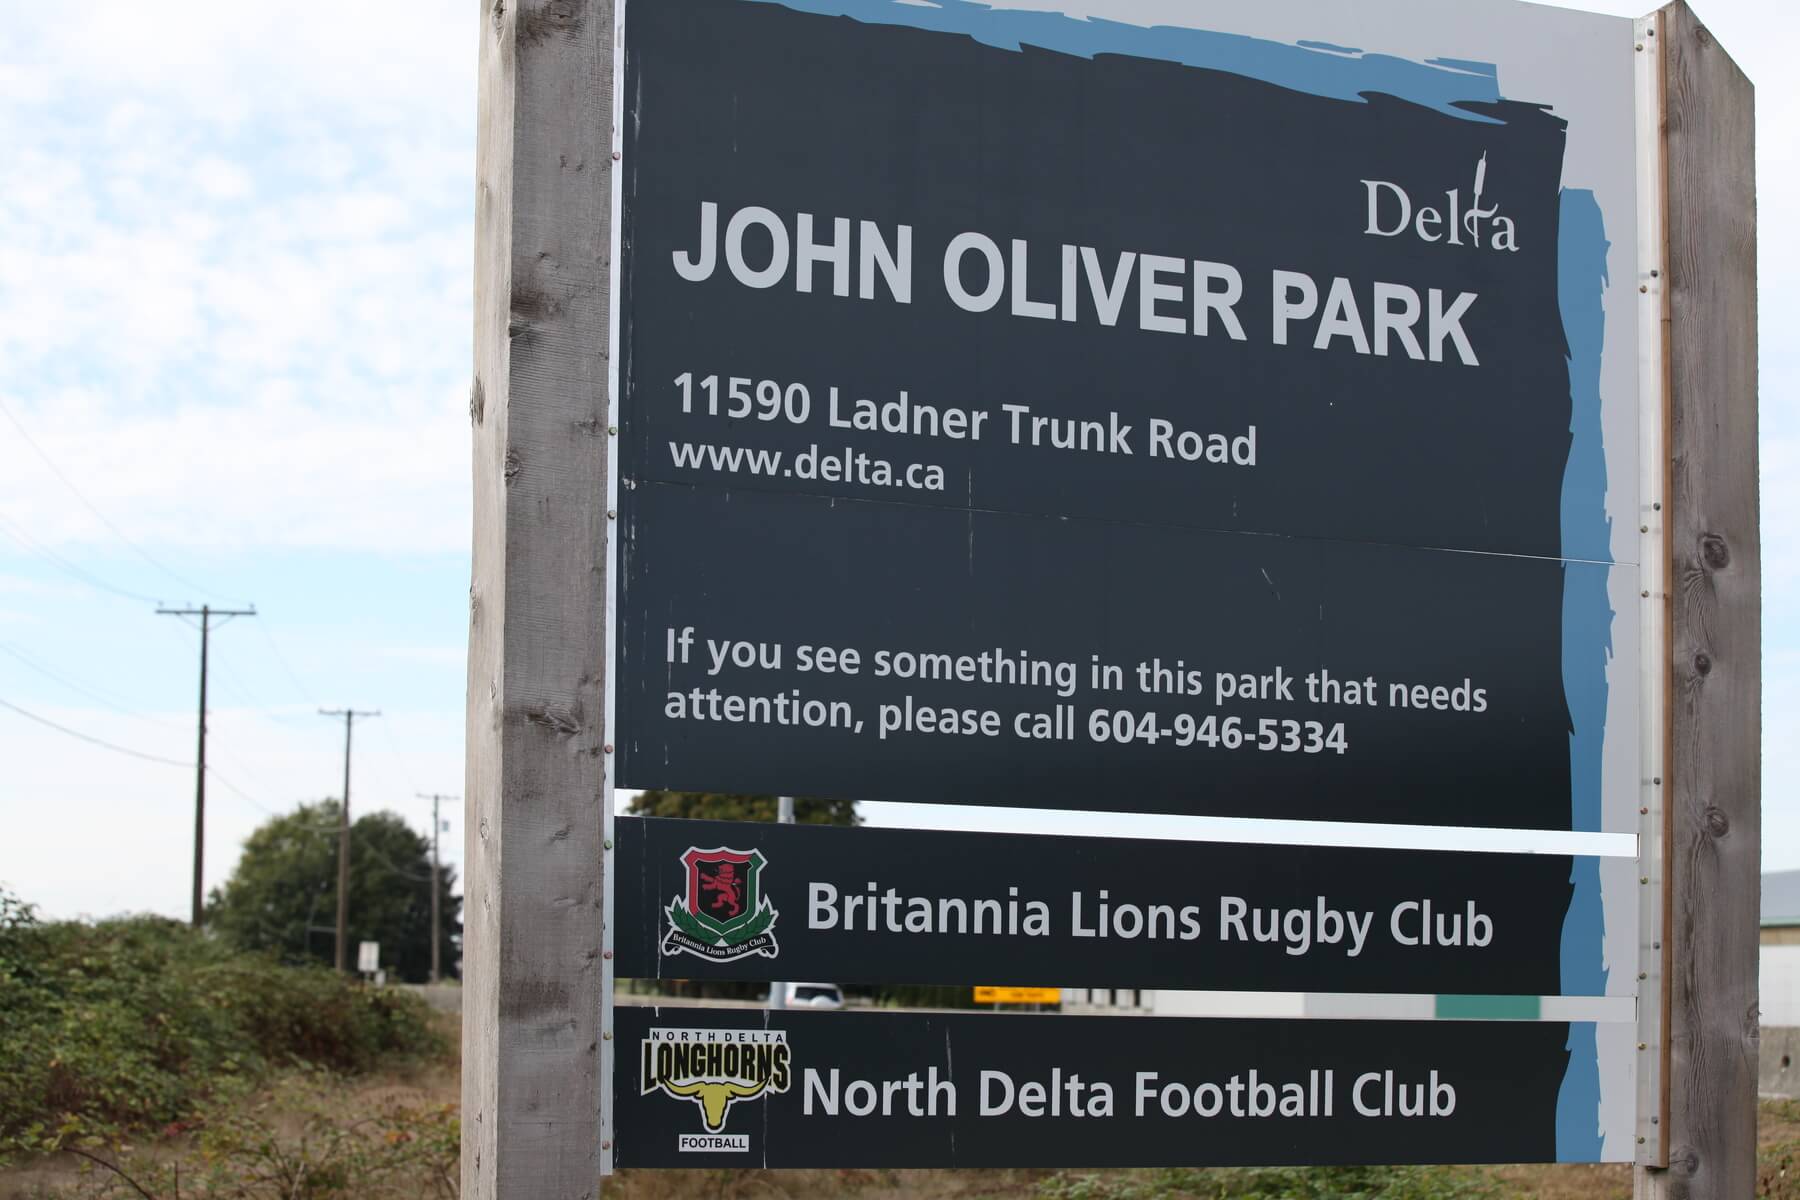 John Oliver Park